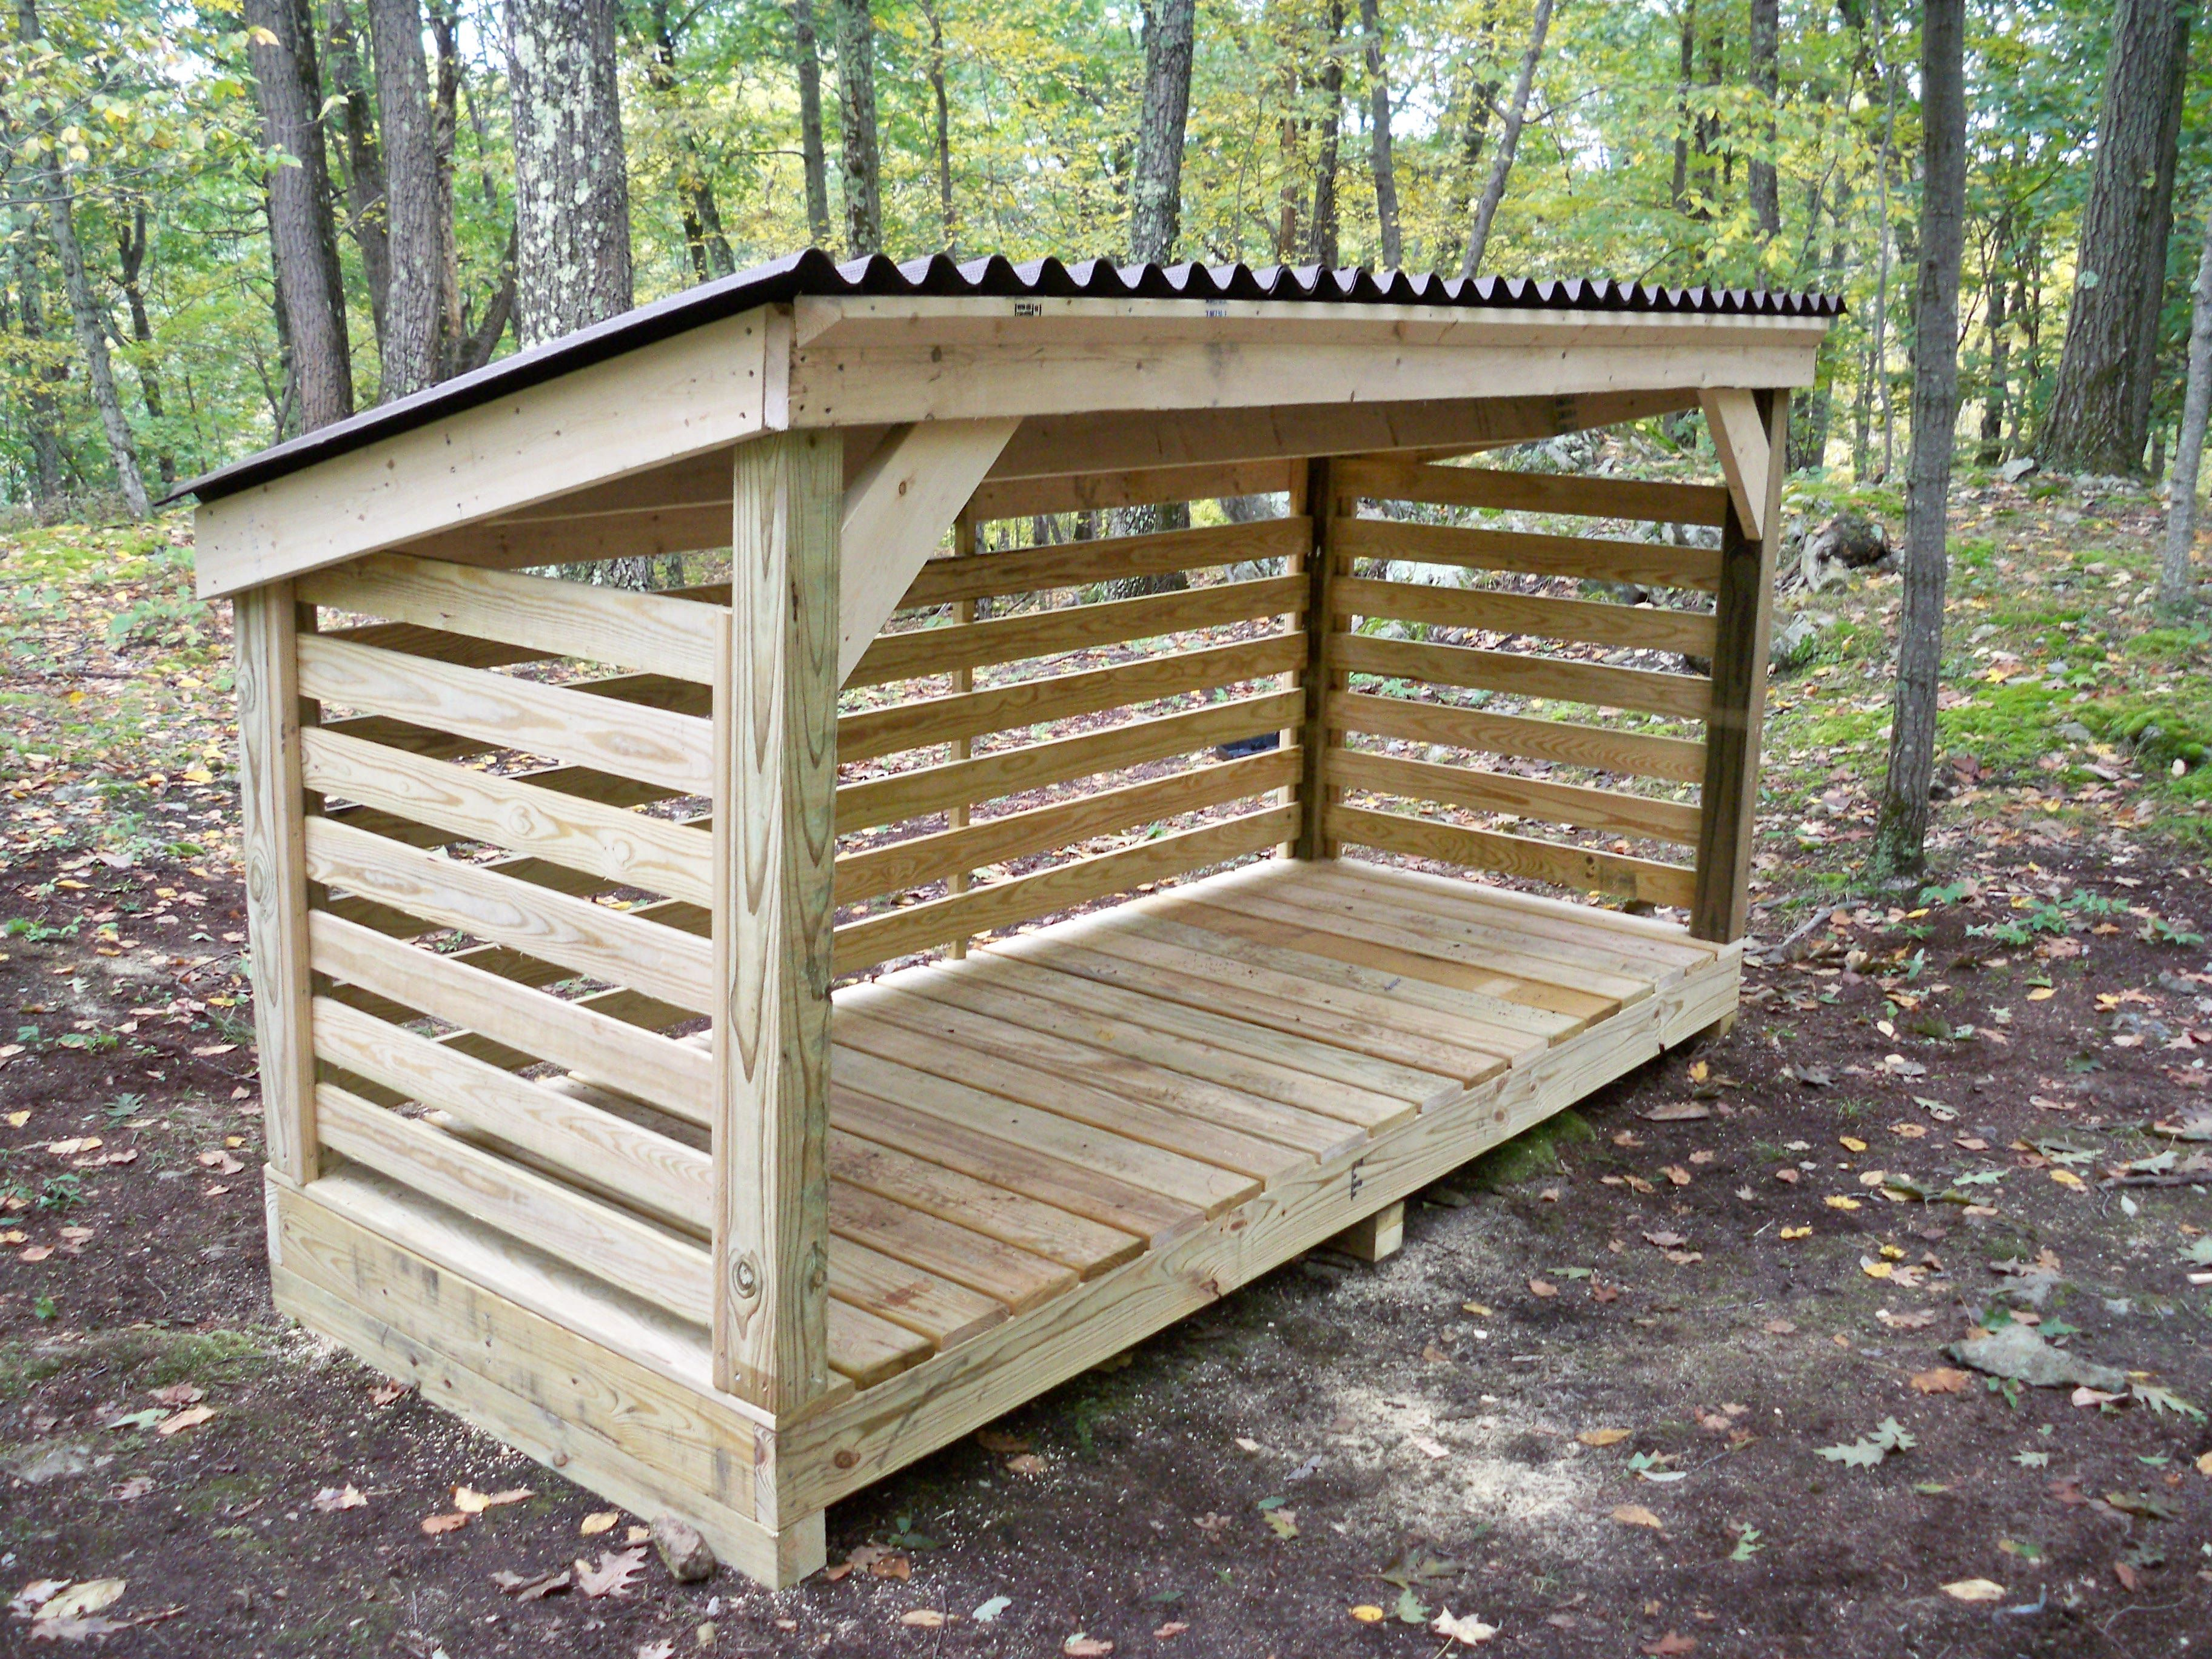 The Oscawana Single Wood Storage Firewood Storage Firewood Shed intended for size 3648 X 2736